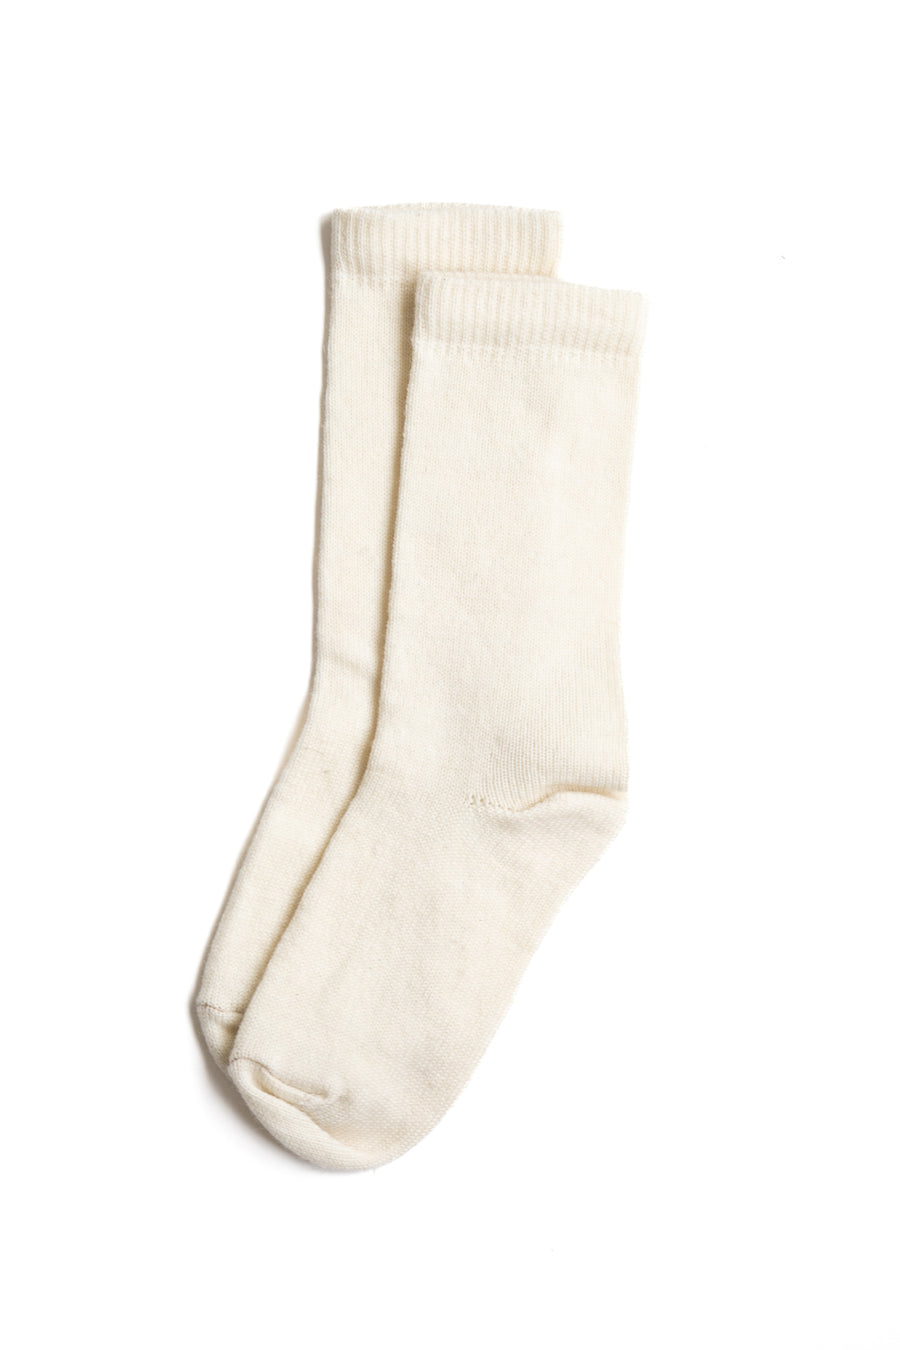 Wool Socks : Natural